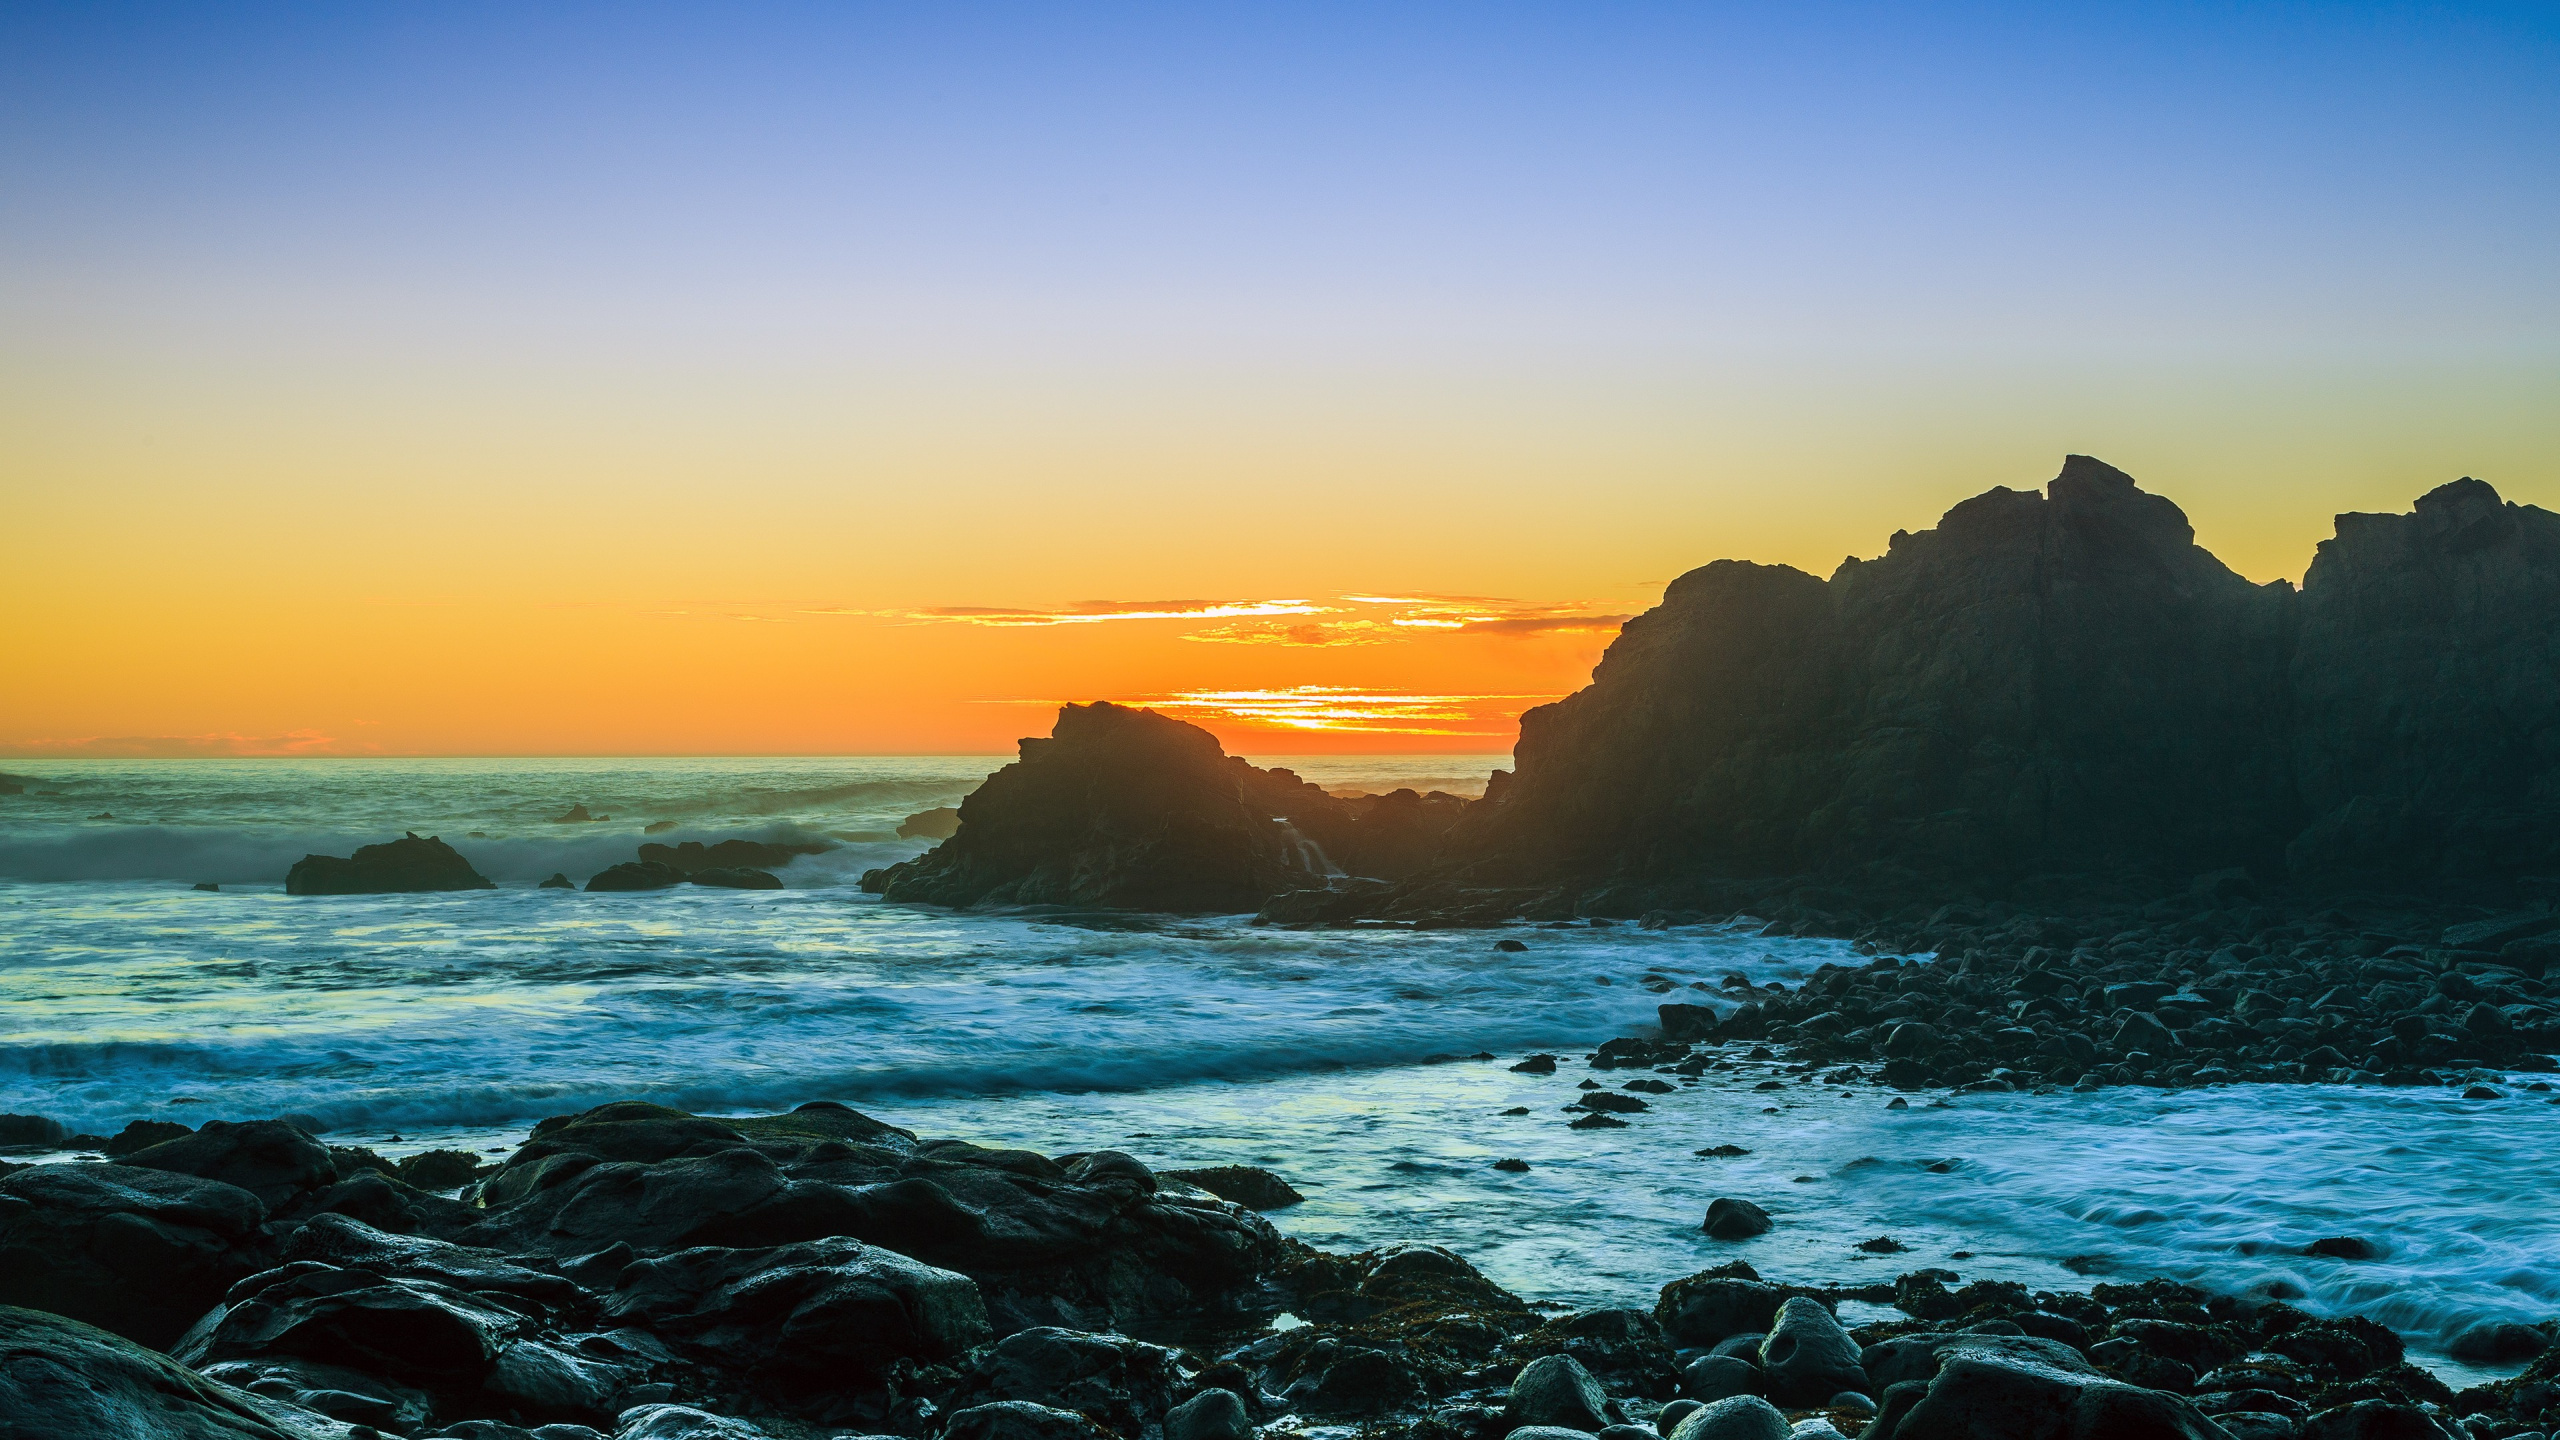 Ocean Waves Crashing on Rocks During Sunset. Wallpaper in 2560x1440 Resolution